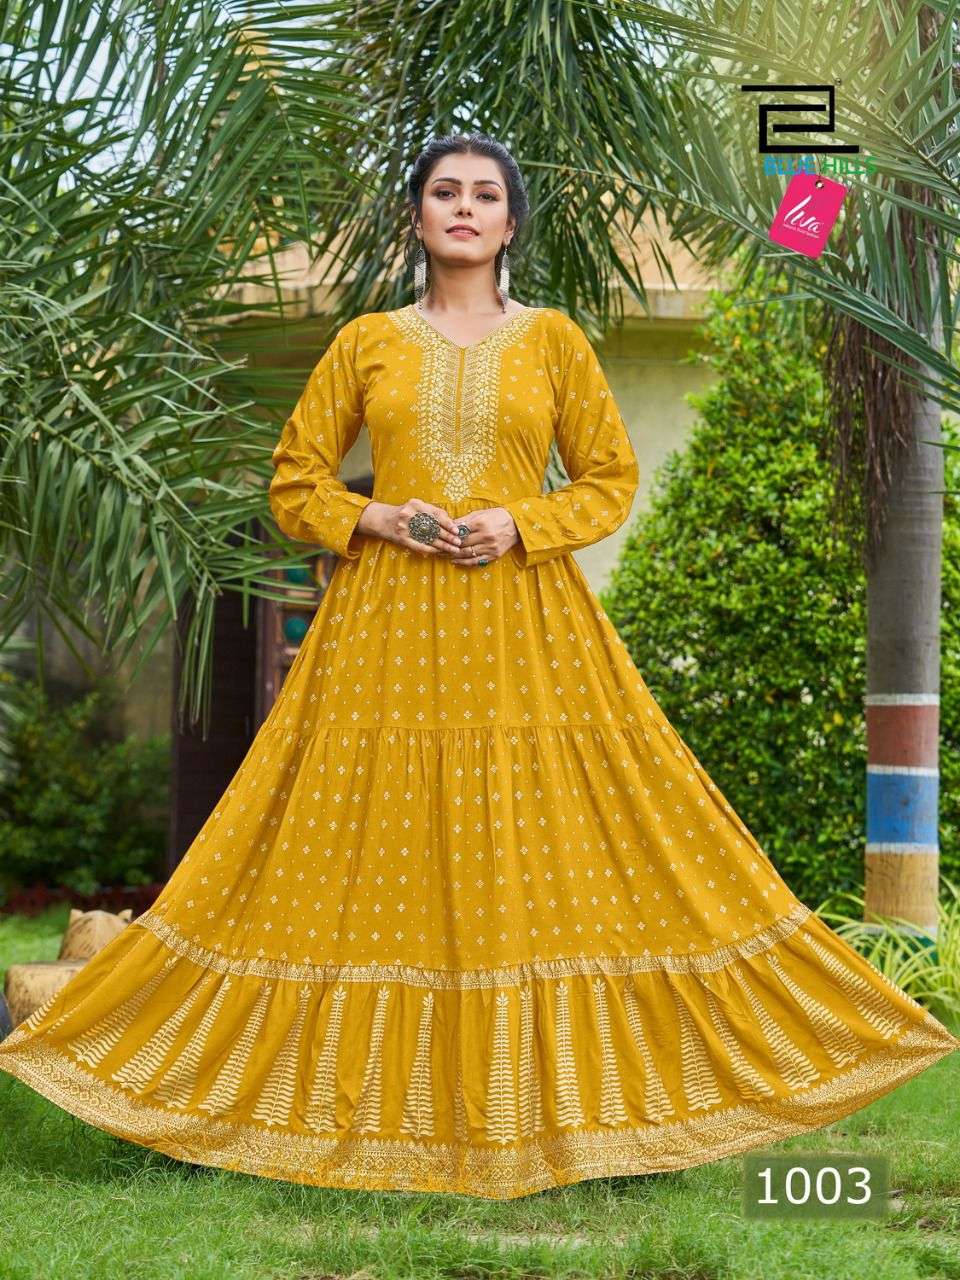 Buy Women's Rayon Anarkali Kurta |Maxi Gown Style| (Yellow-XL) at Amazon.in